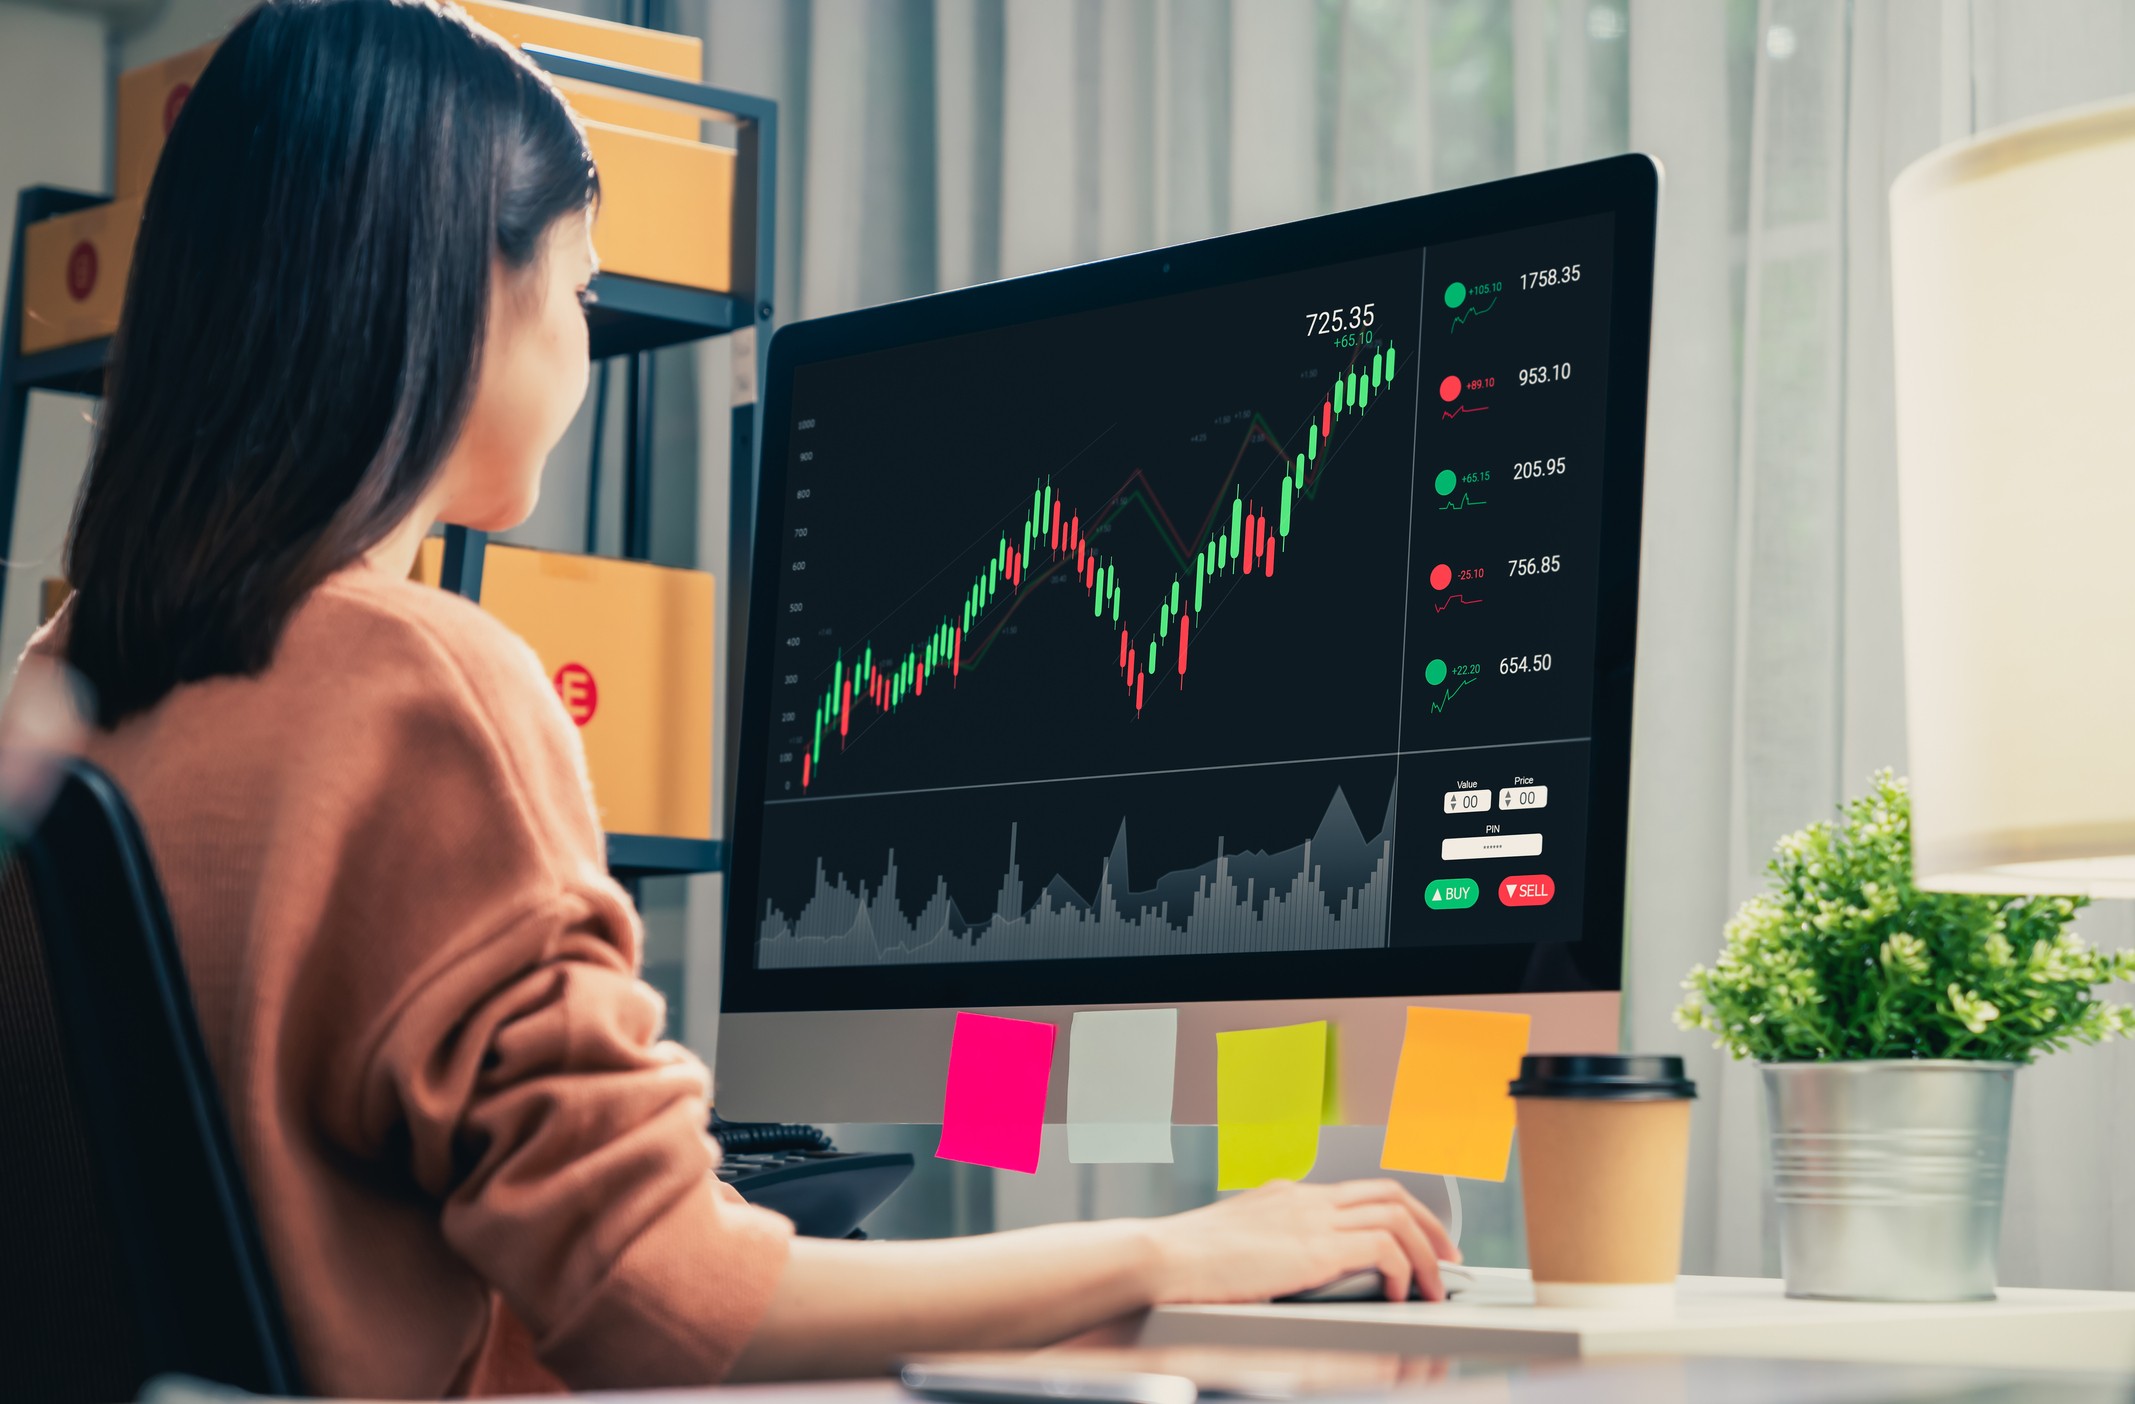 Trader looking at computer screens with trading charts and financial data